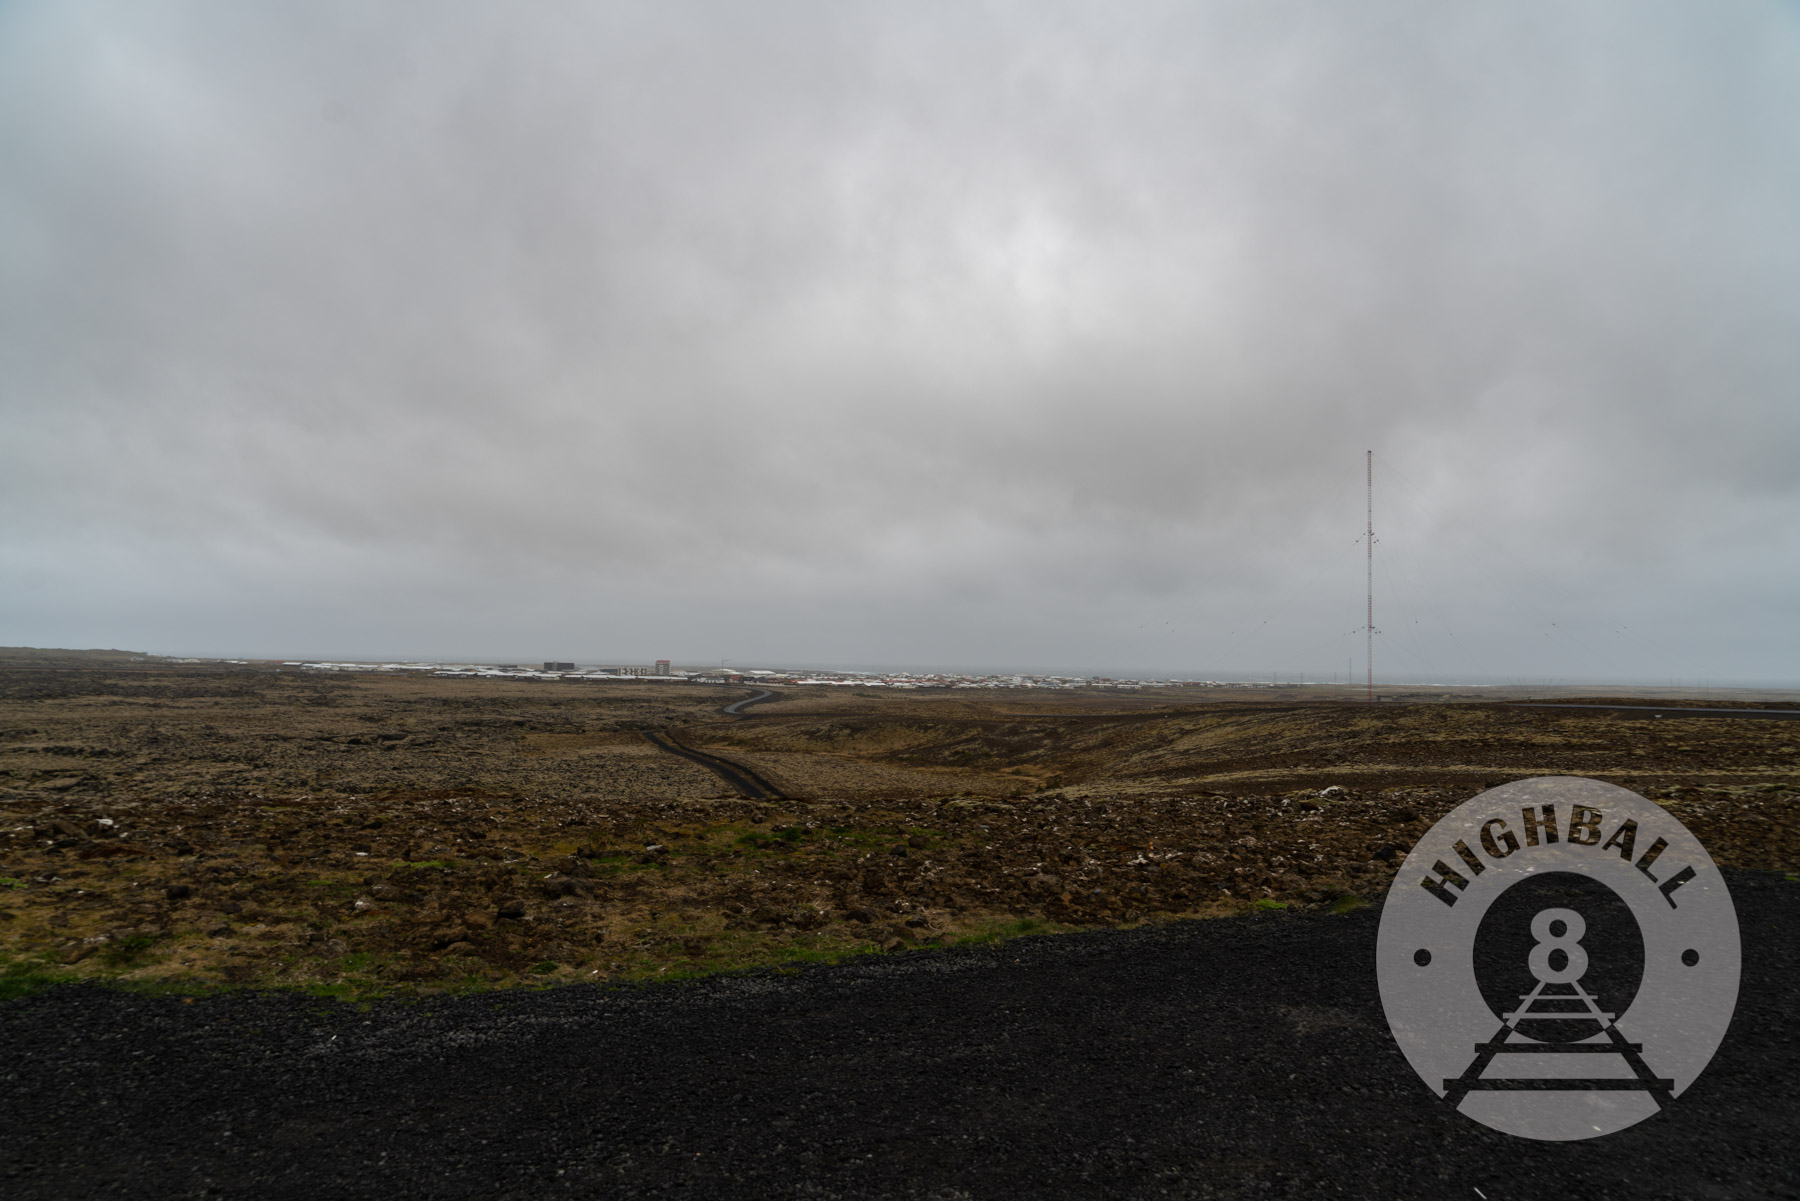 Landscape with Grindavik in the distance, Iceland, 2018.